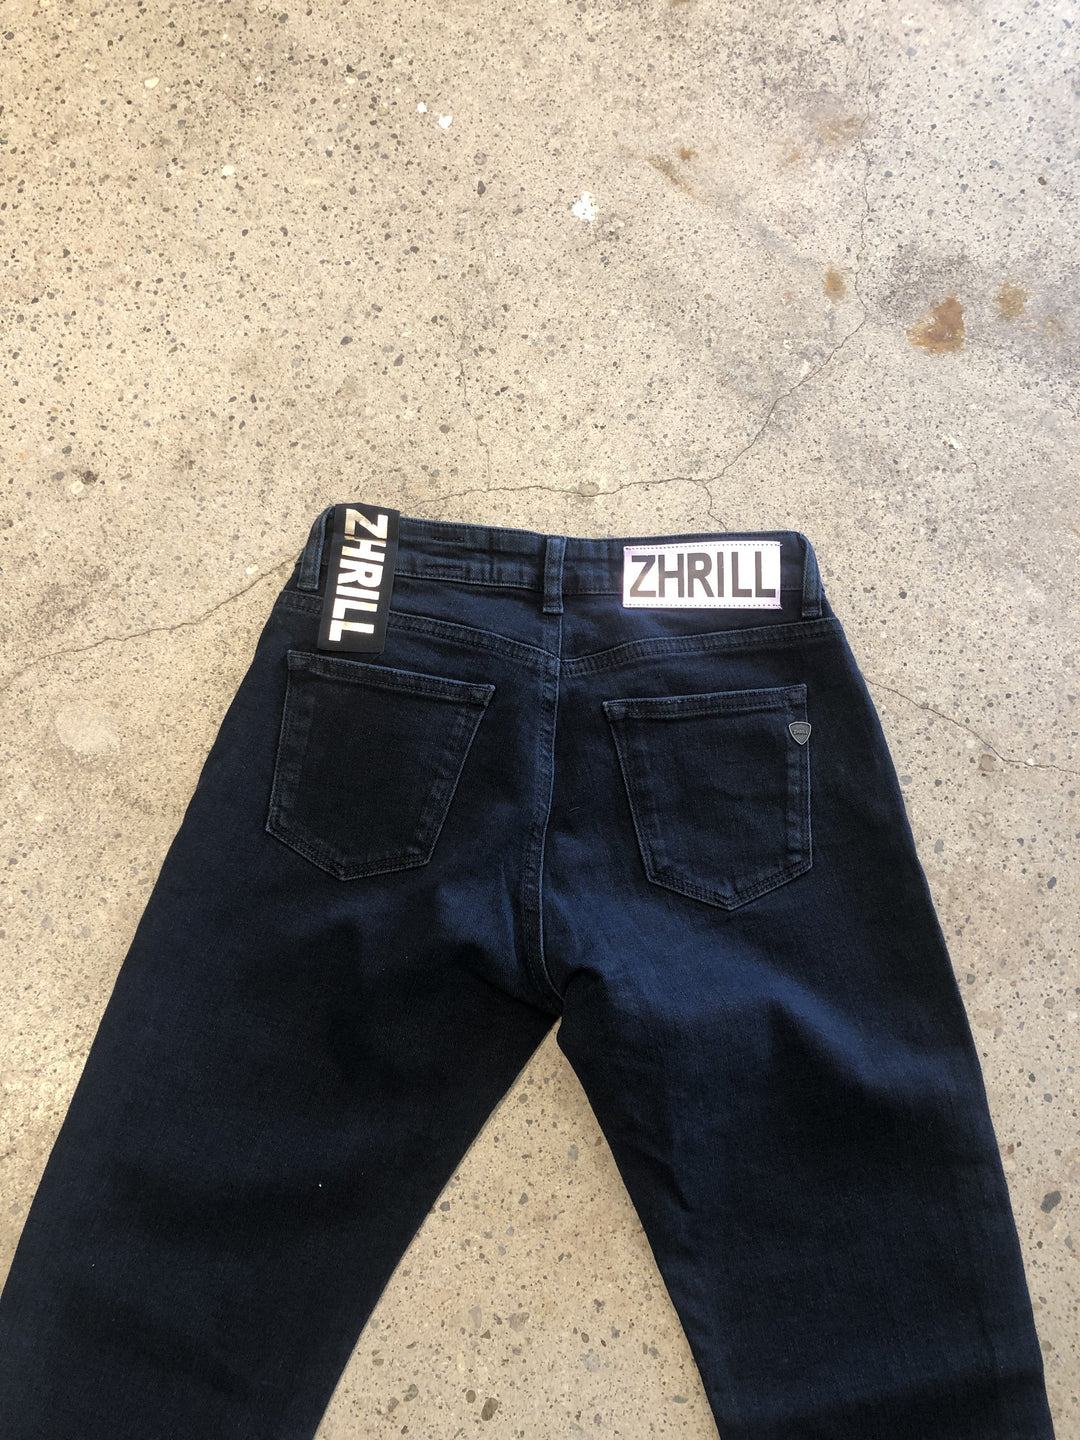 Zhrill Nova Black Jeans - Shop 9